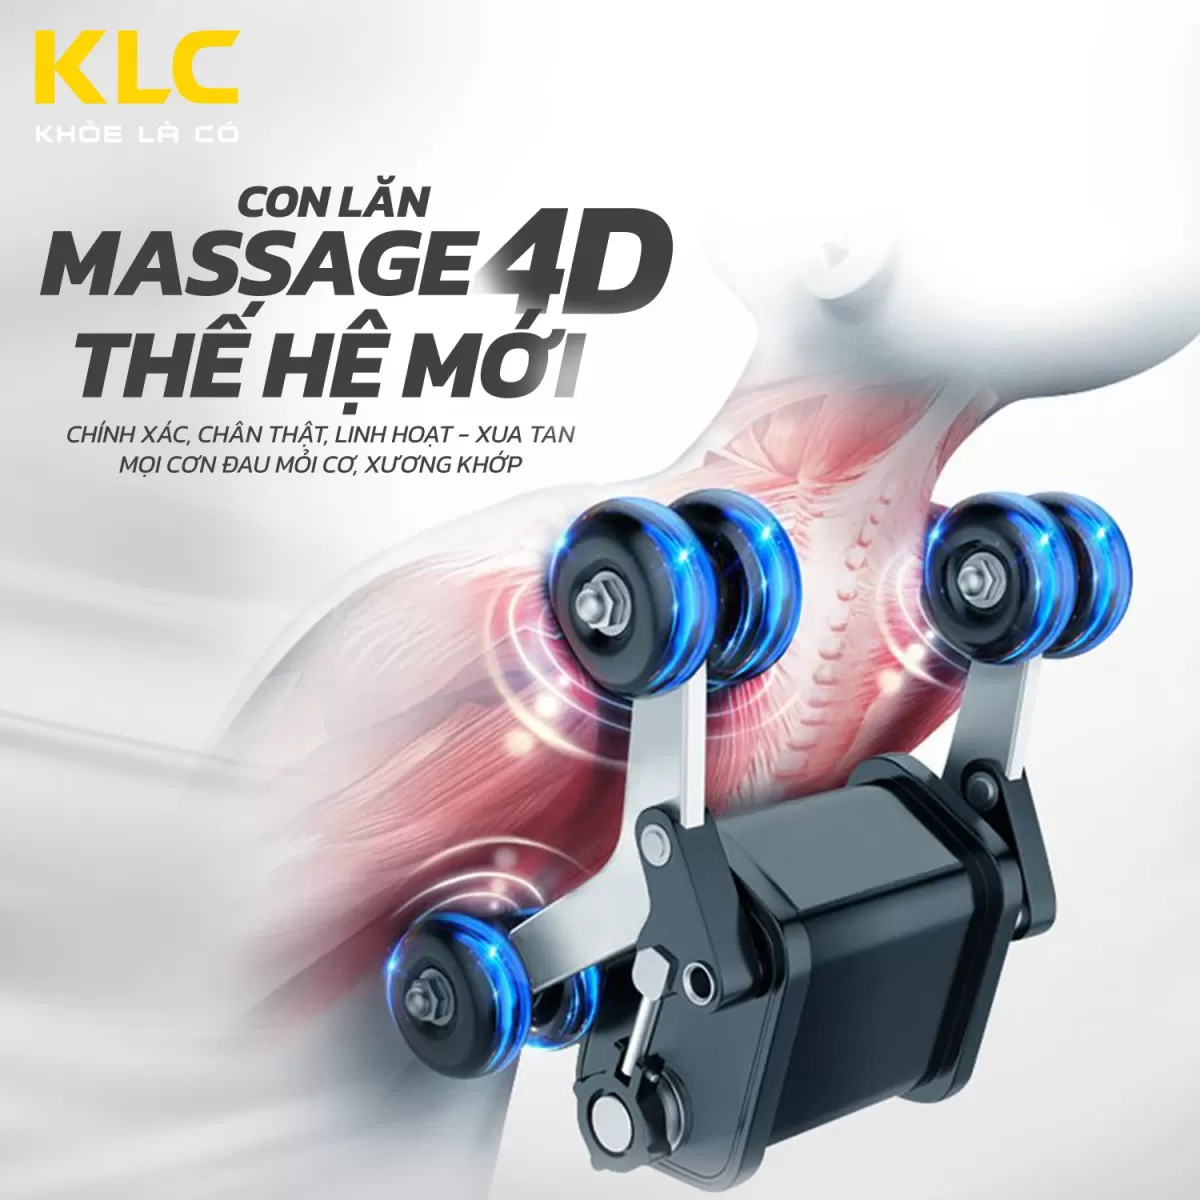 con lăn massage 4D của Ghế Massage KLC K228